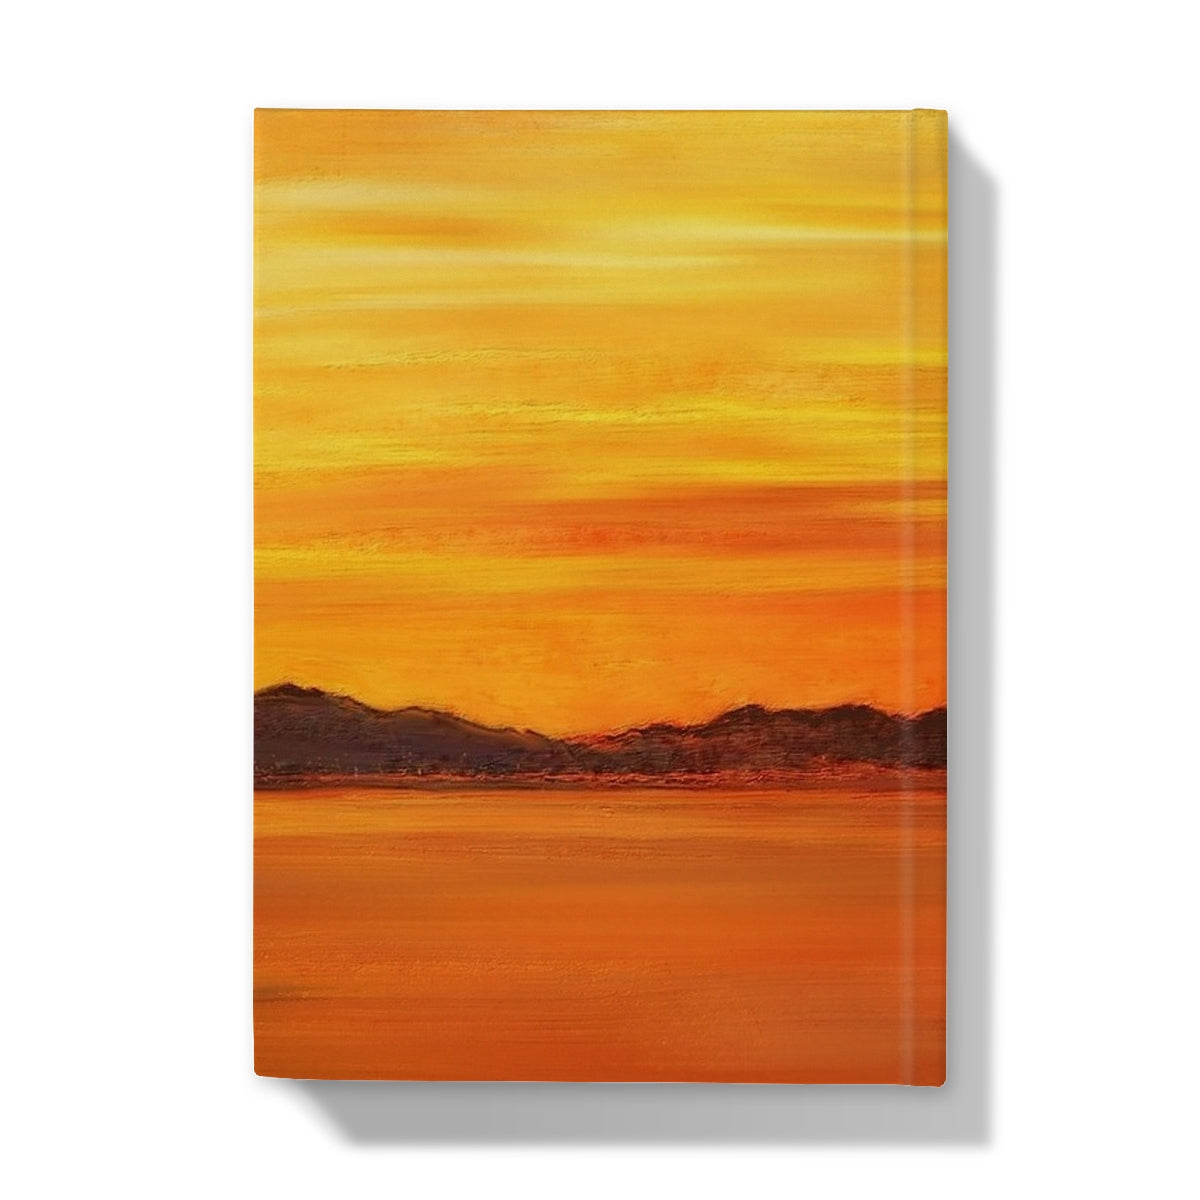 Loch Fyne Sunset Art Gifts Hardback Journal-Journals & Notebooks-Scottish Lochs & Mountains Art Gallery-Paintings, Prints, Homeware, Art Gifts From Scotland By Scottish Artist Kevin Hunter